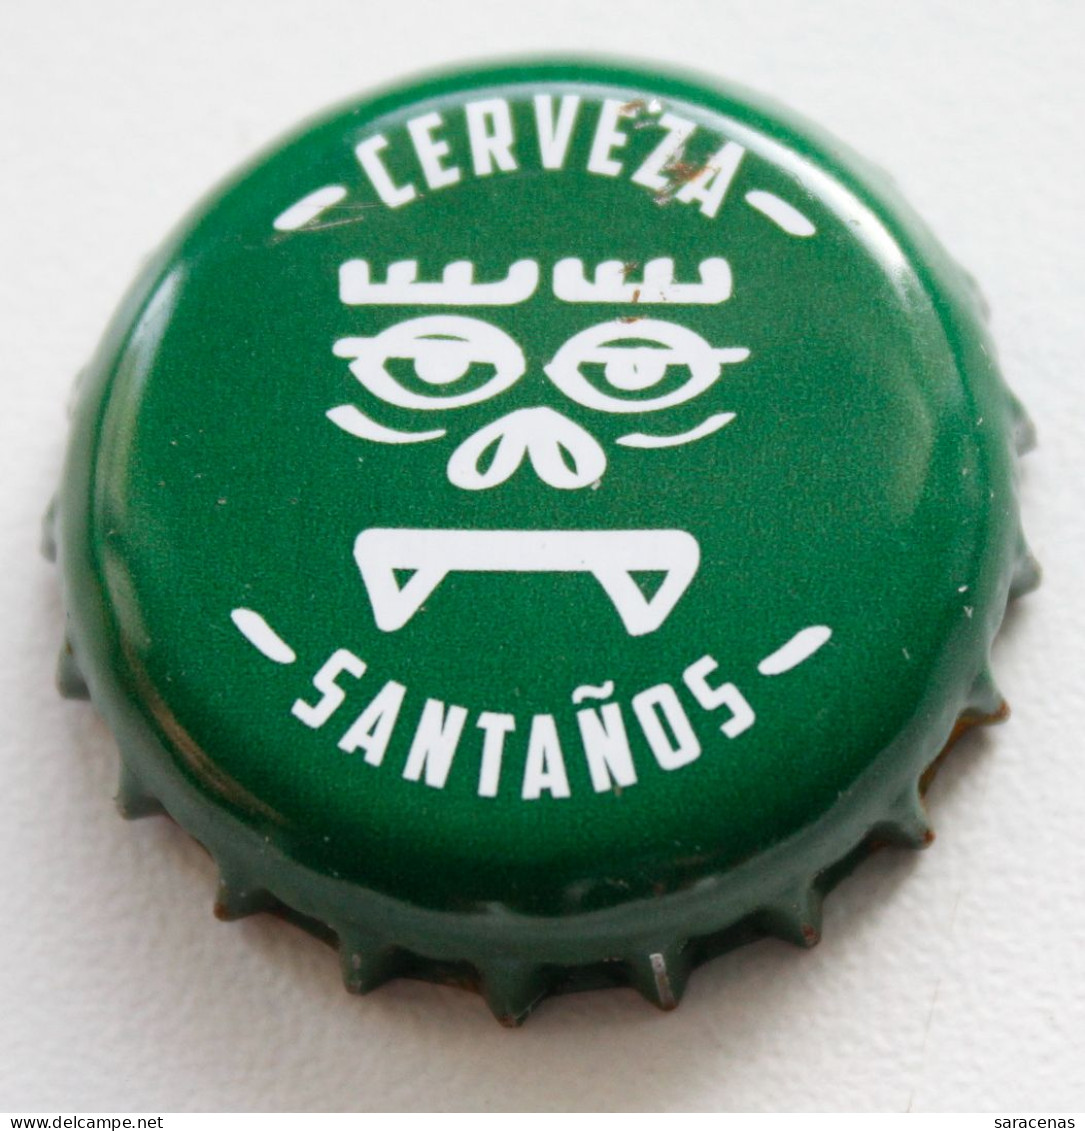 Estonia Cerveza Santanos Face Beer Bottle Cap - Soda